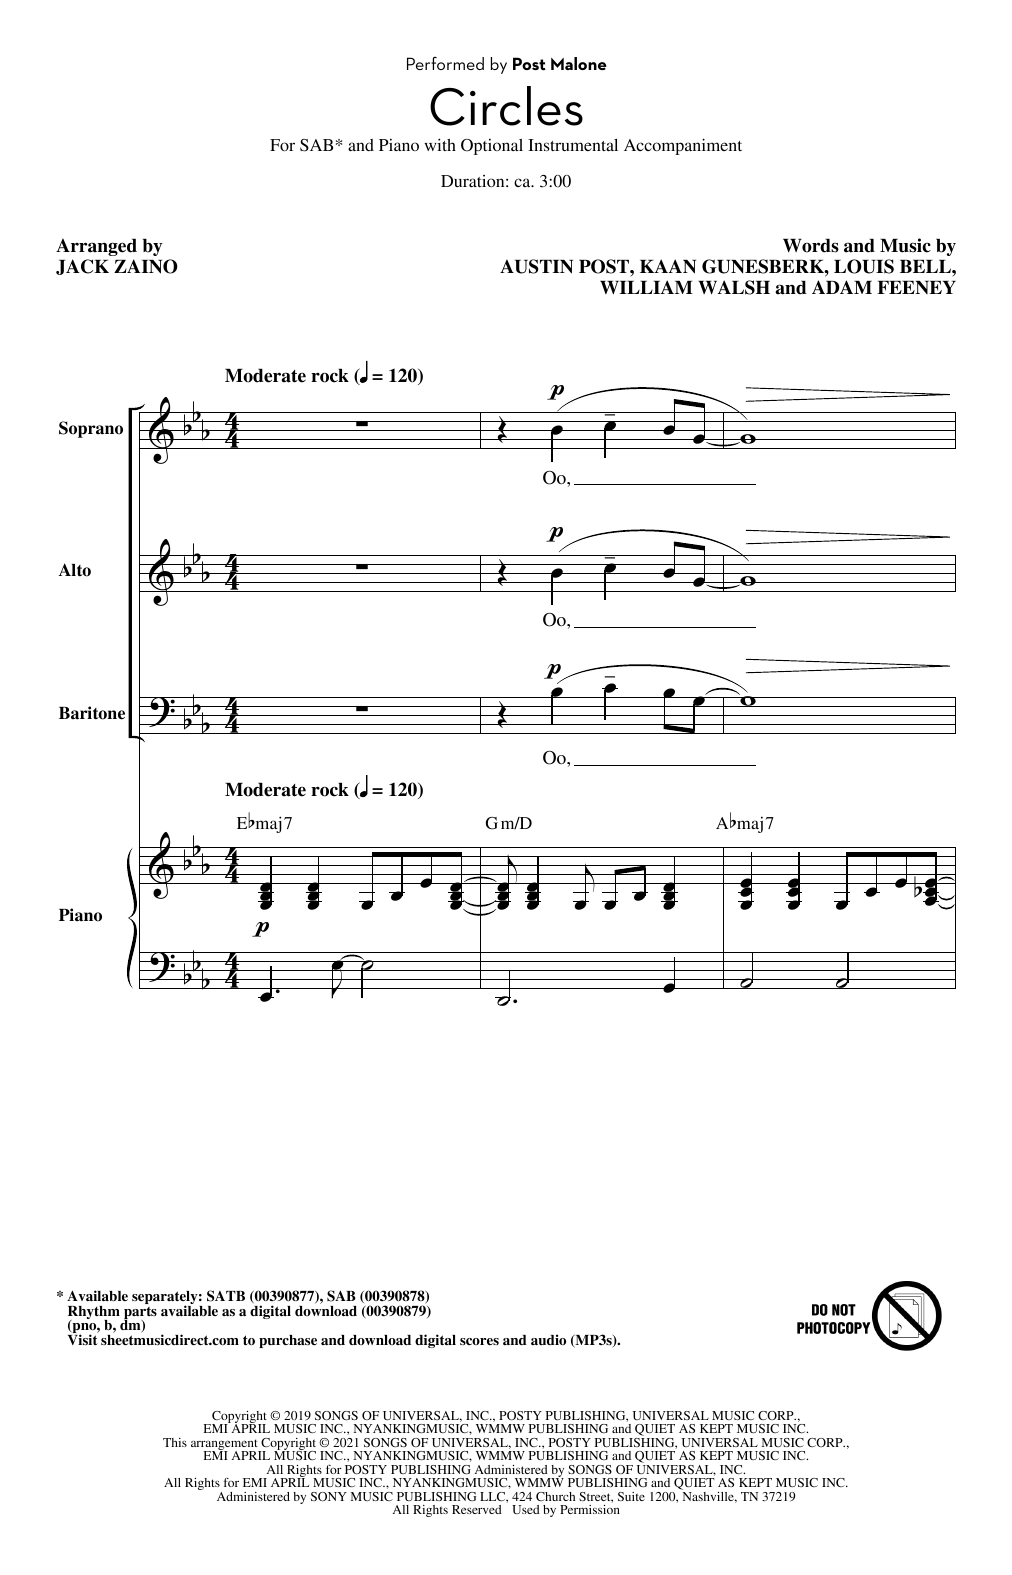 Post Malone Circles (arr. Jack Zaino) Sheet Music Notes & Chords for SATB Choir - Download or Print PDF